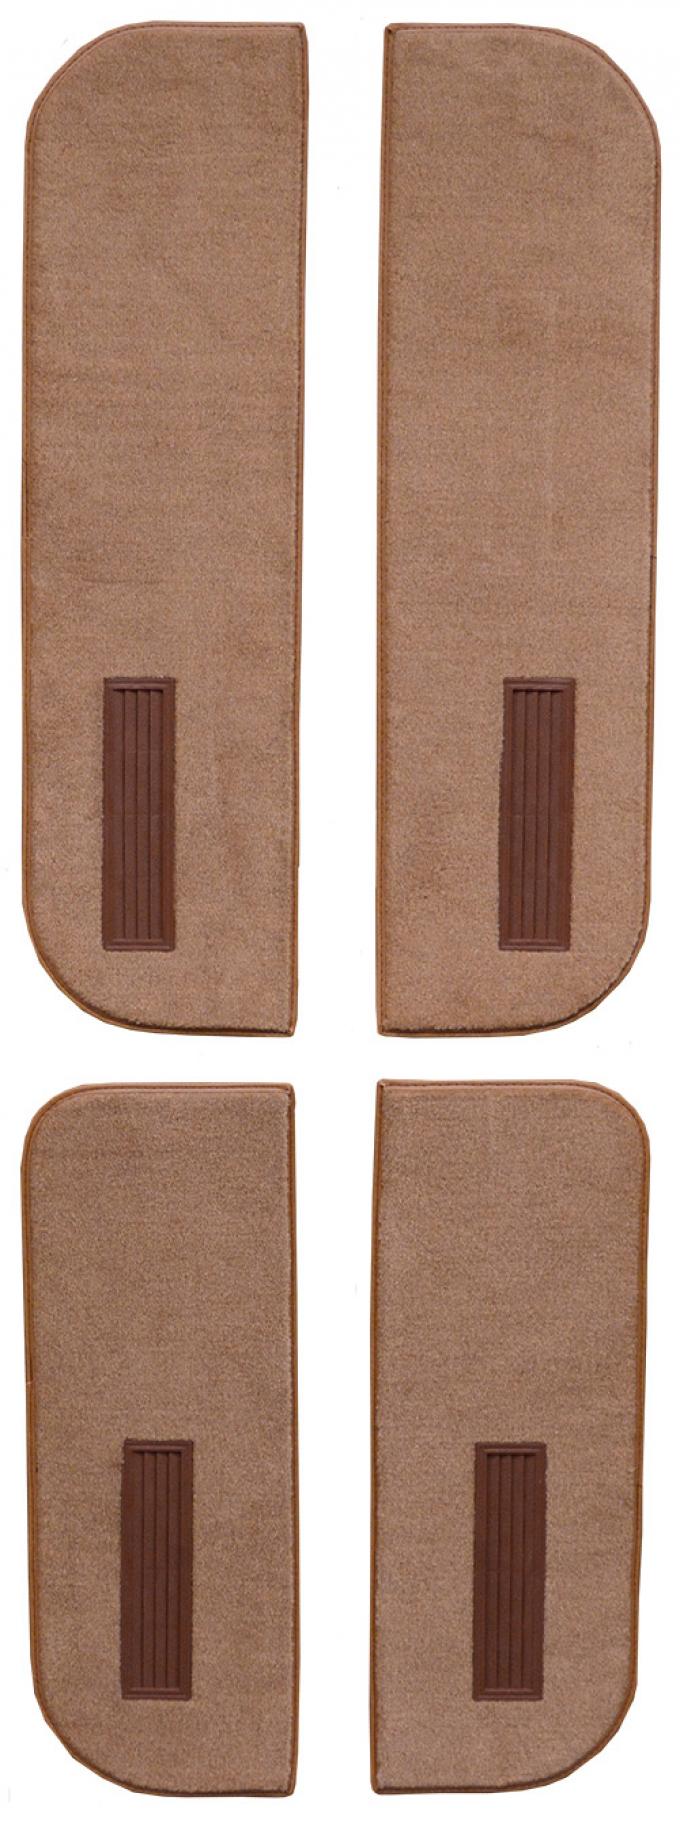 ACC 1973 GMC C25/C2500 Suburban Door Panel Inserts on Cardboard w/Vents 4pc Loop Carpet